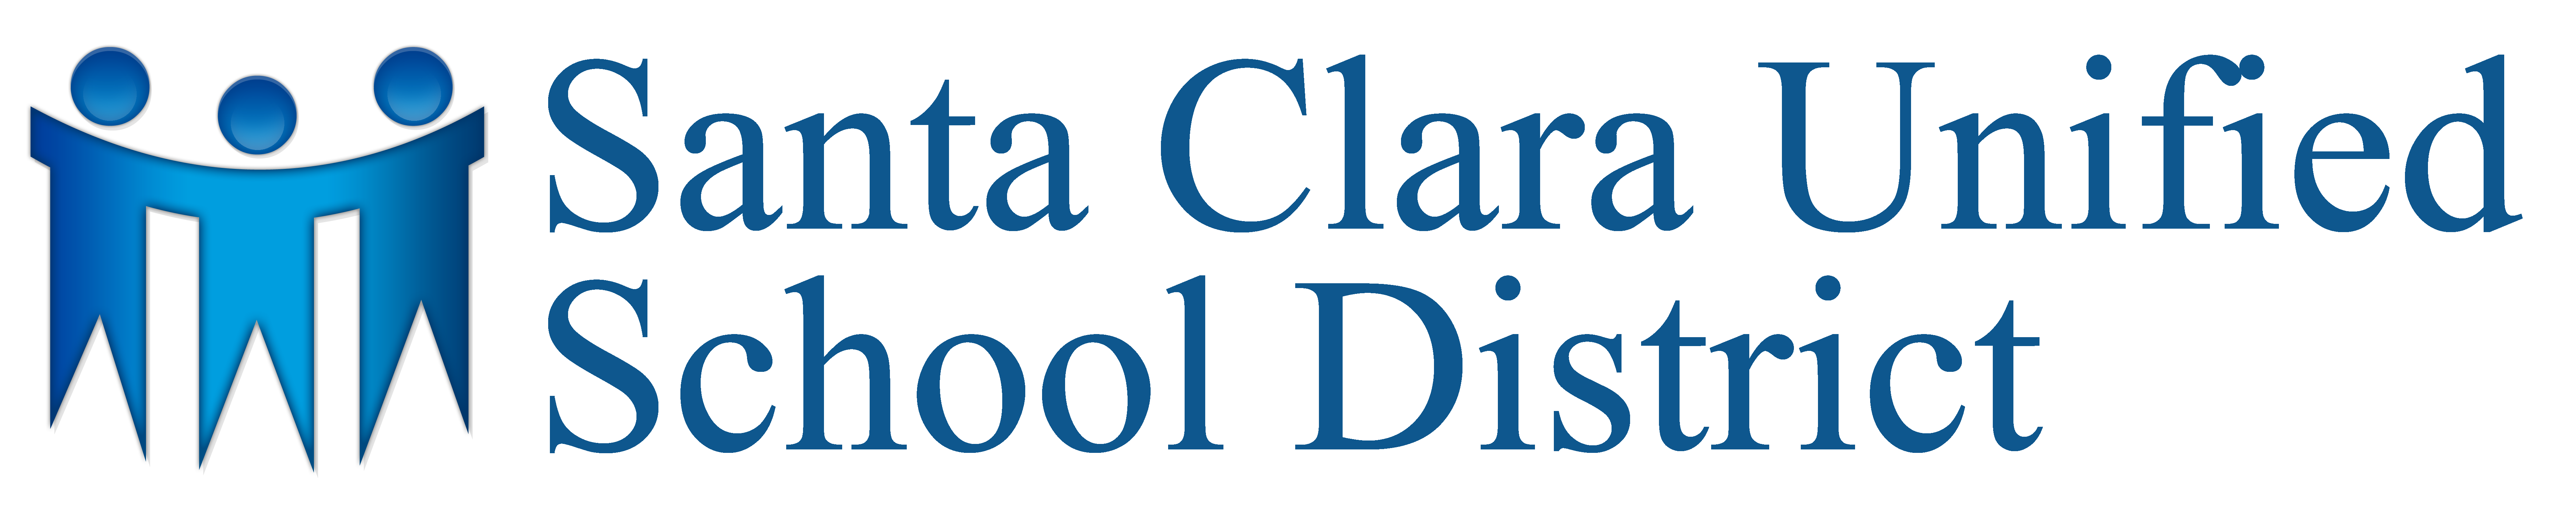 Santa Clara Unified School District's Logo